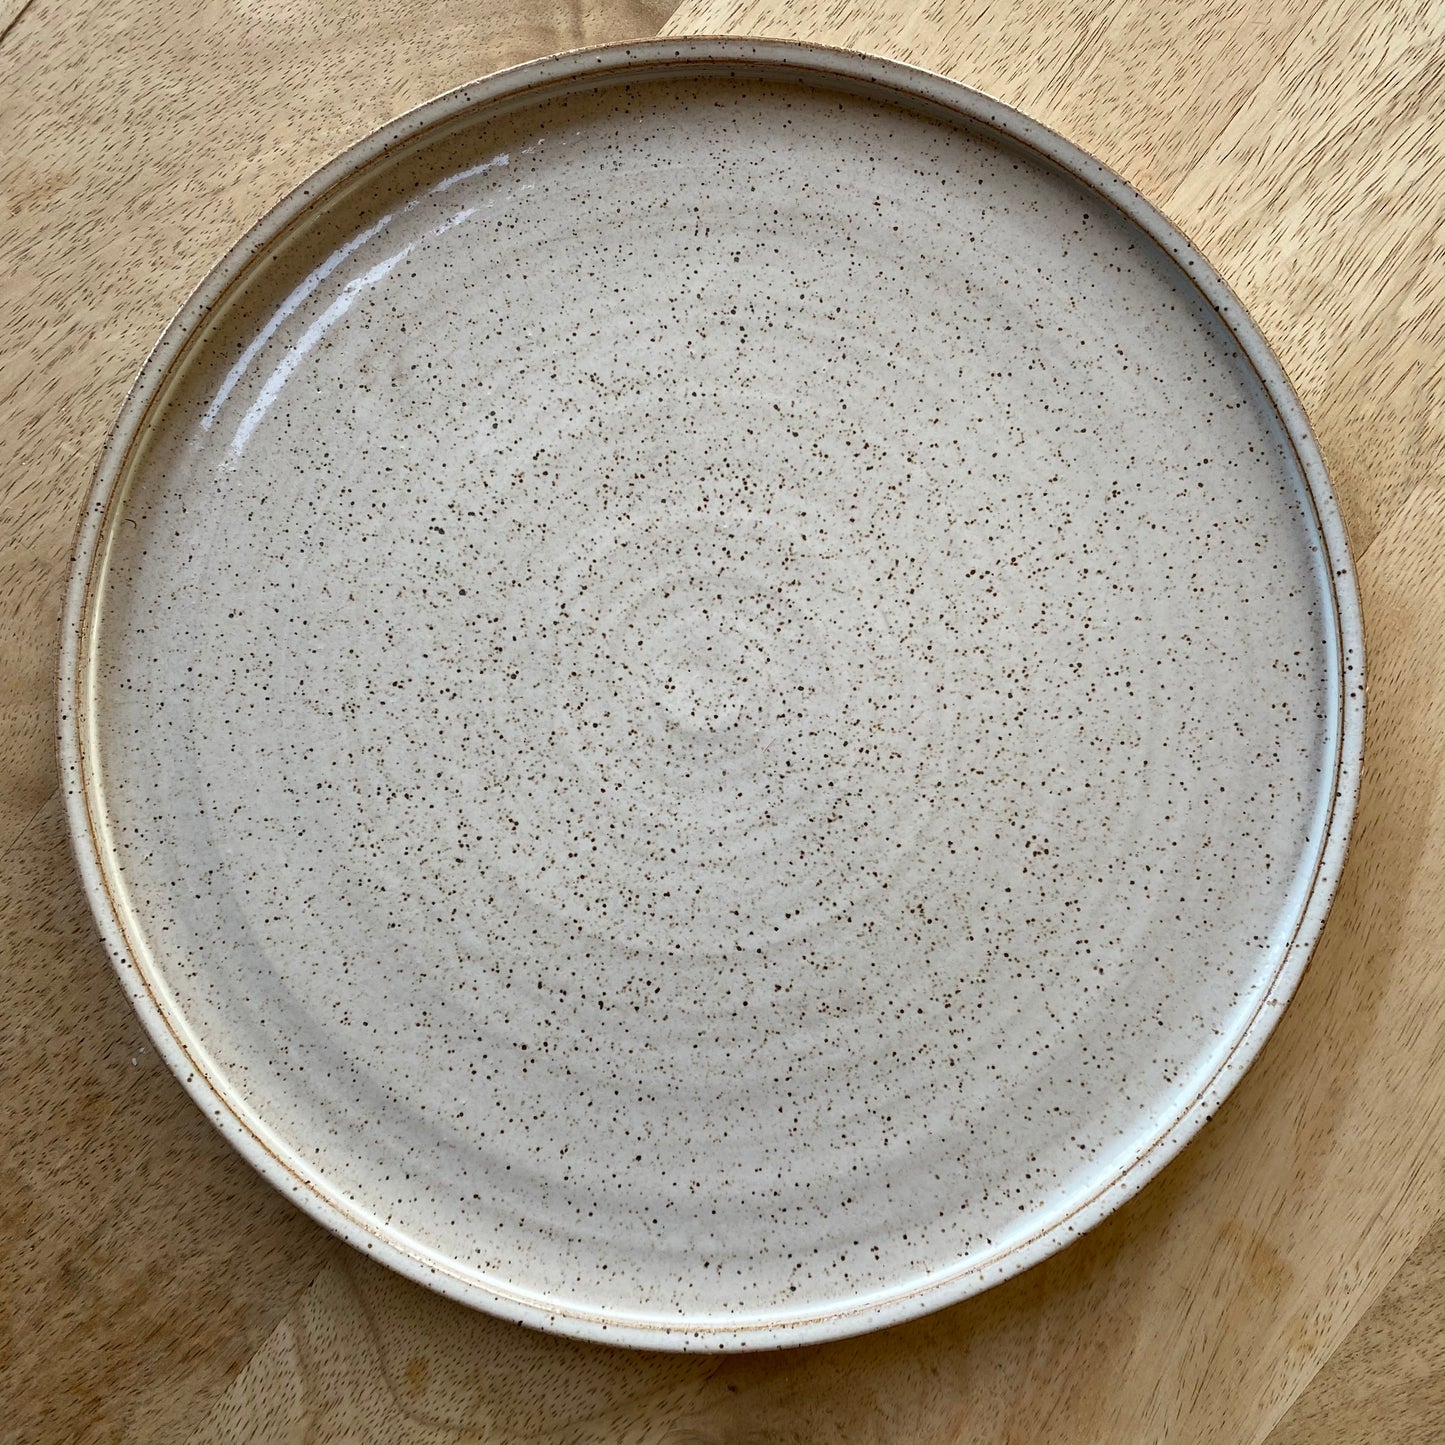 Coin Dinner Plate: Speckled White